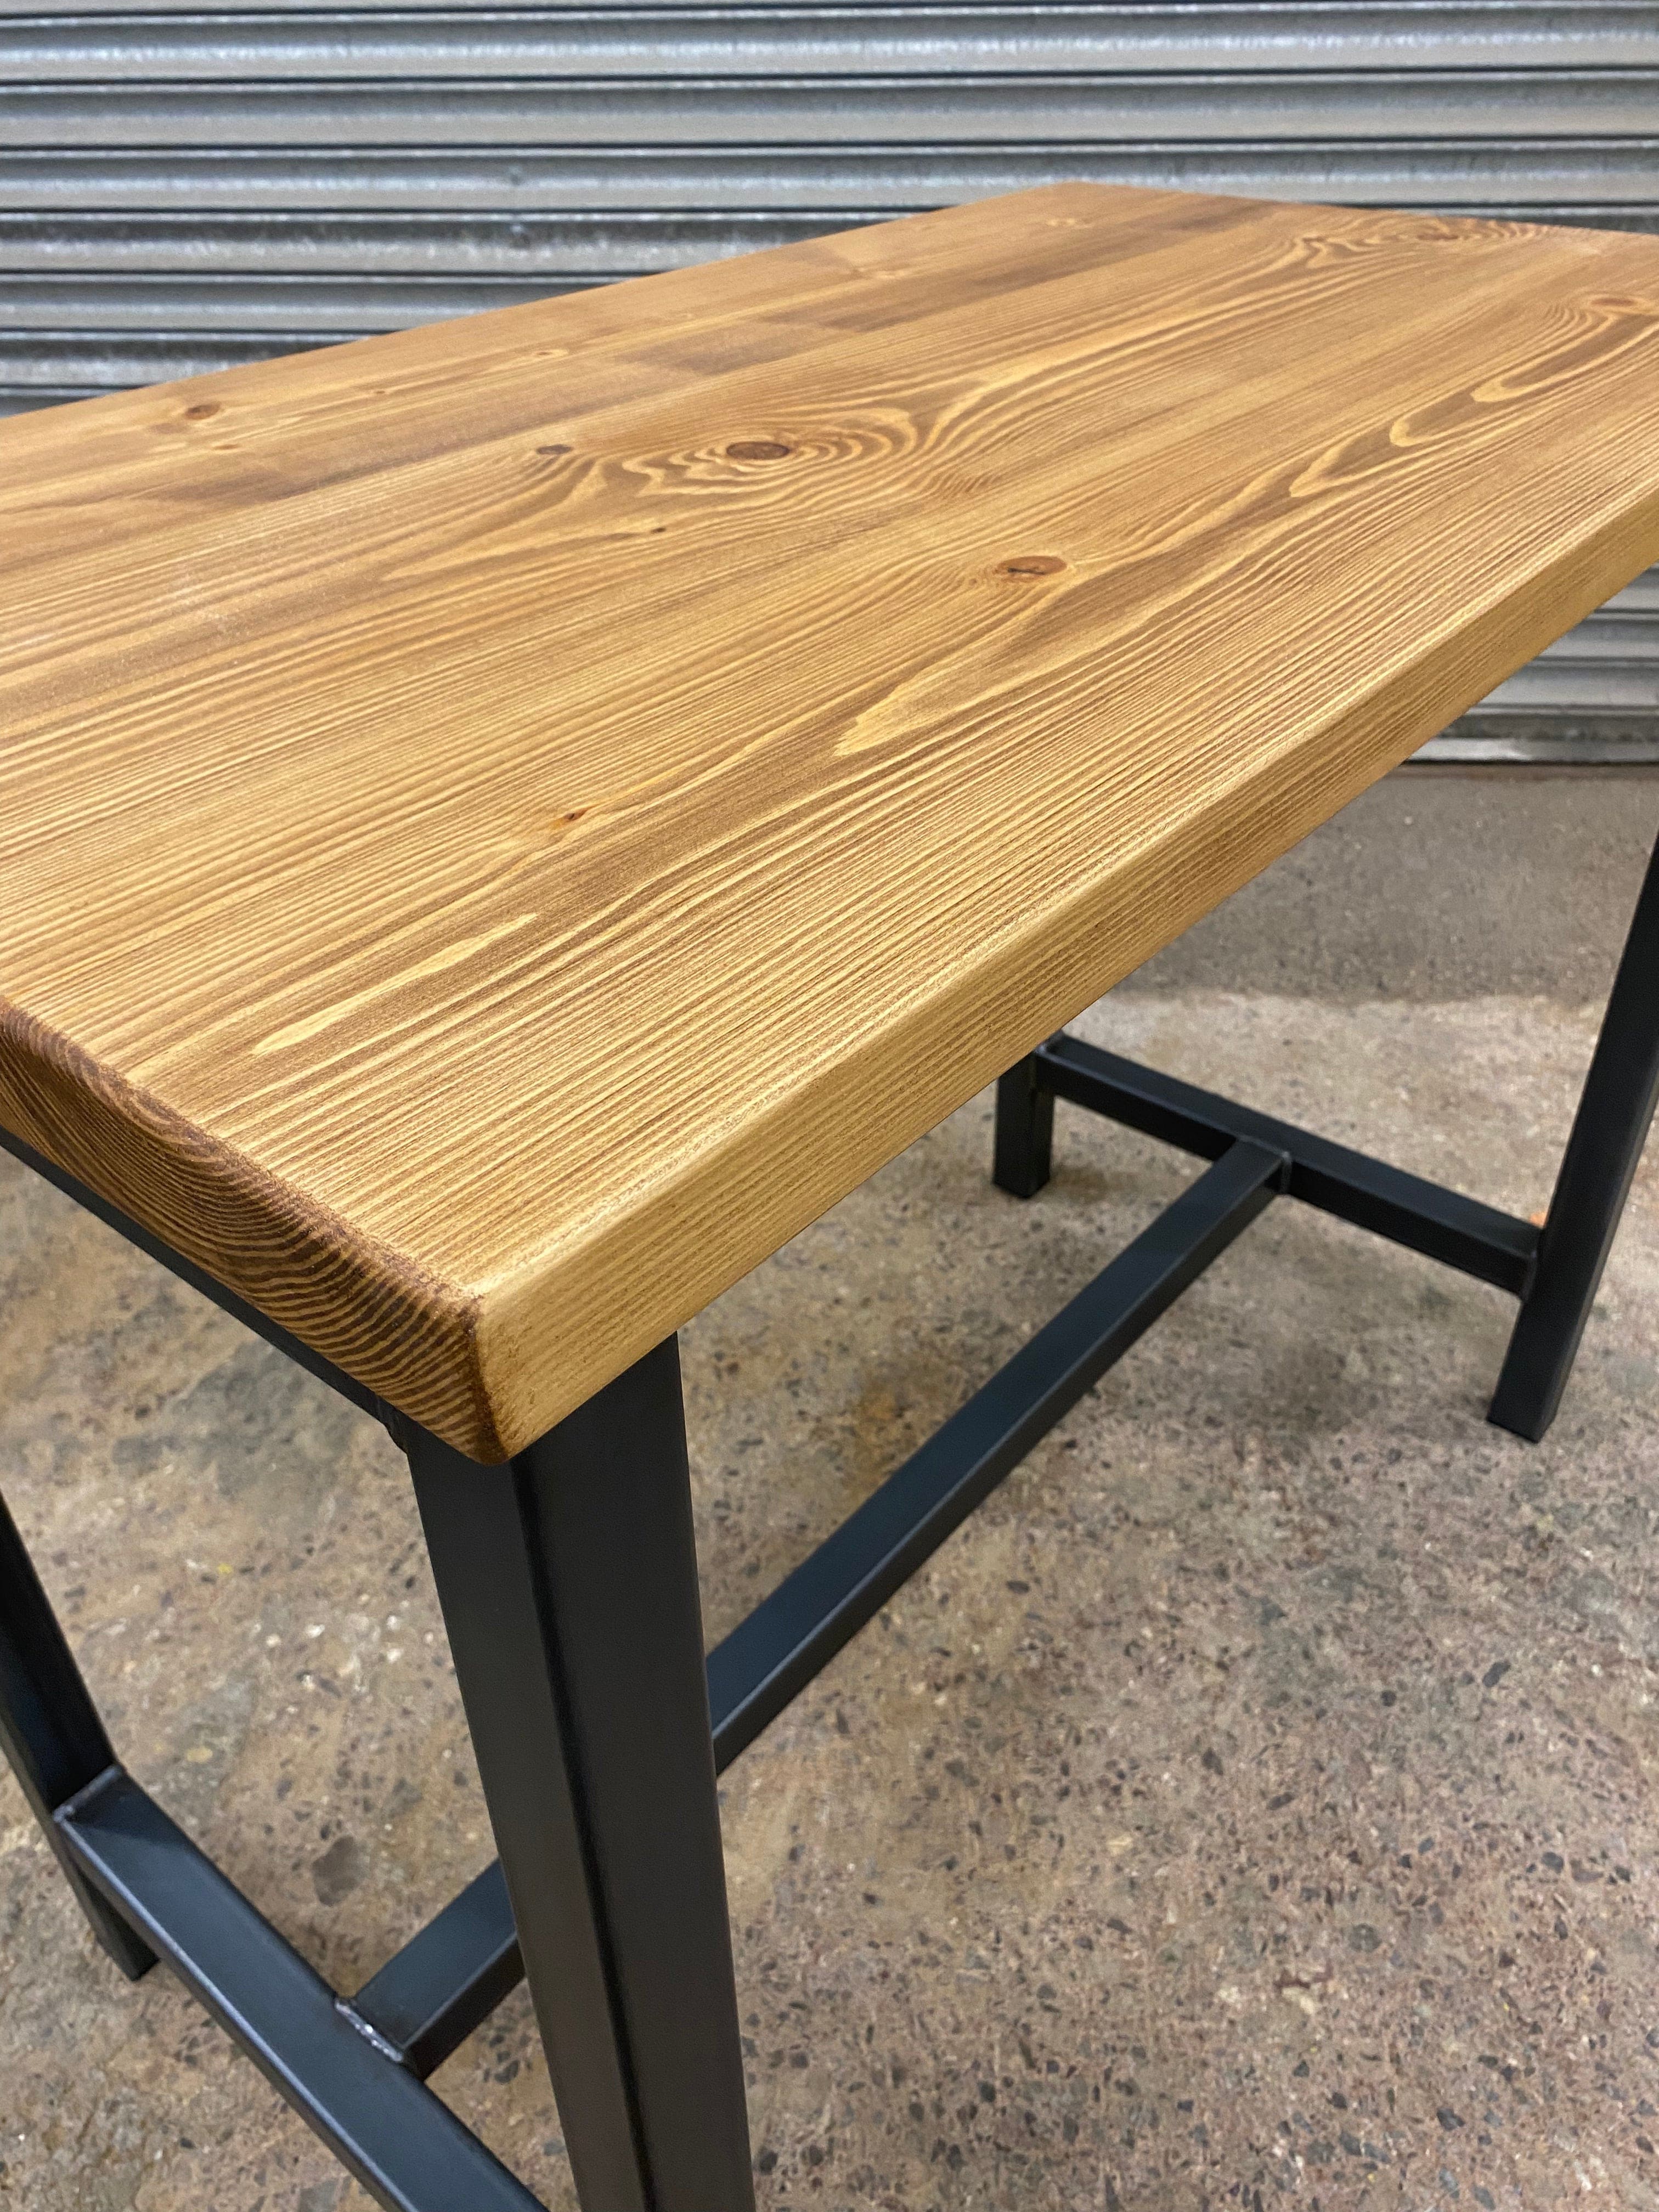 Industrial Style Kitchen Breakfast Bar - Steel Frame & Wood Top  RSD Furniture   